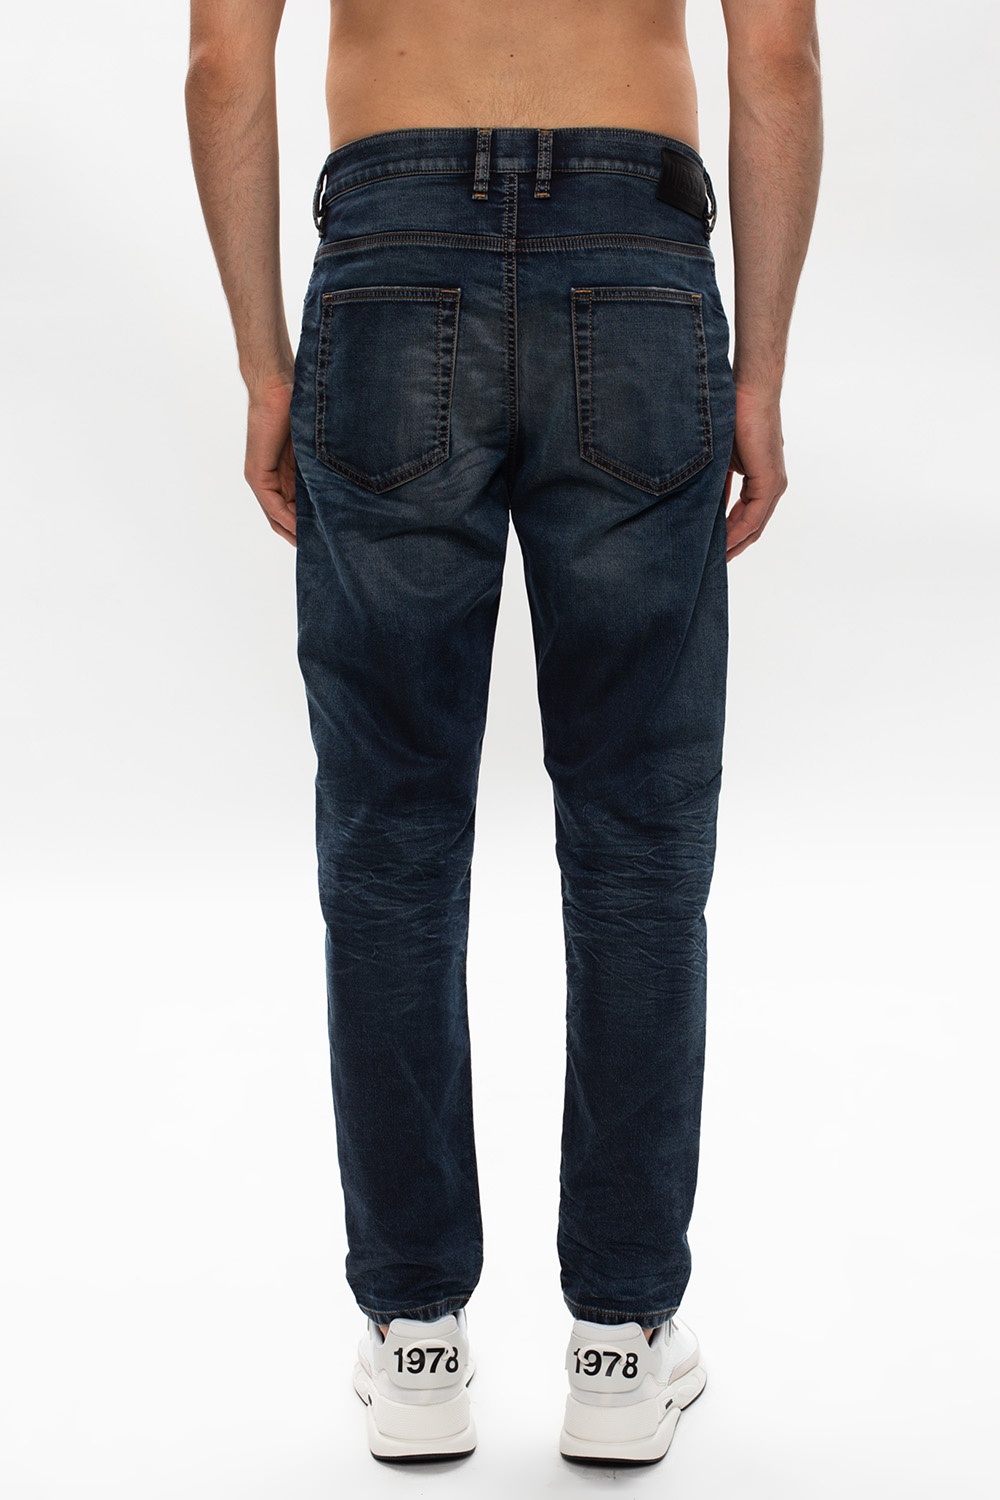 Diesel 'D-Vider Jogg' jeans | Men's Clothing |